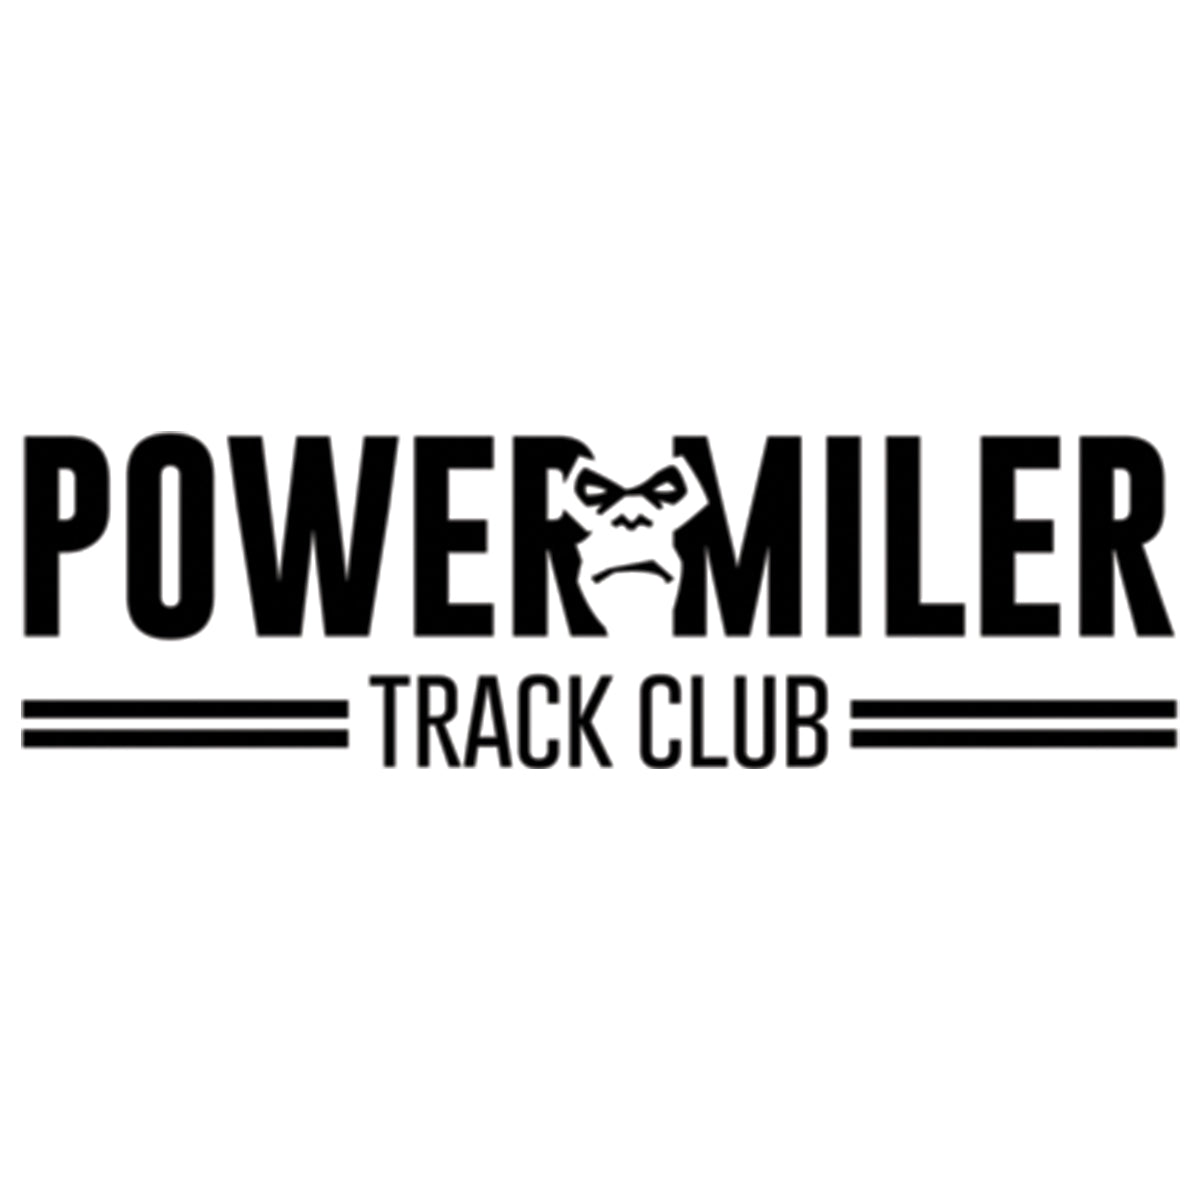 Power Miller Track Club